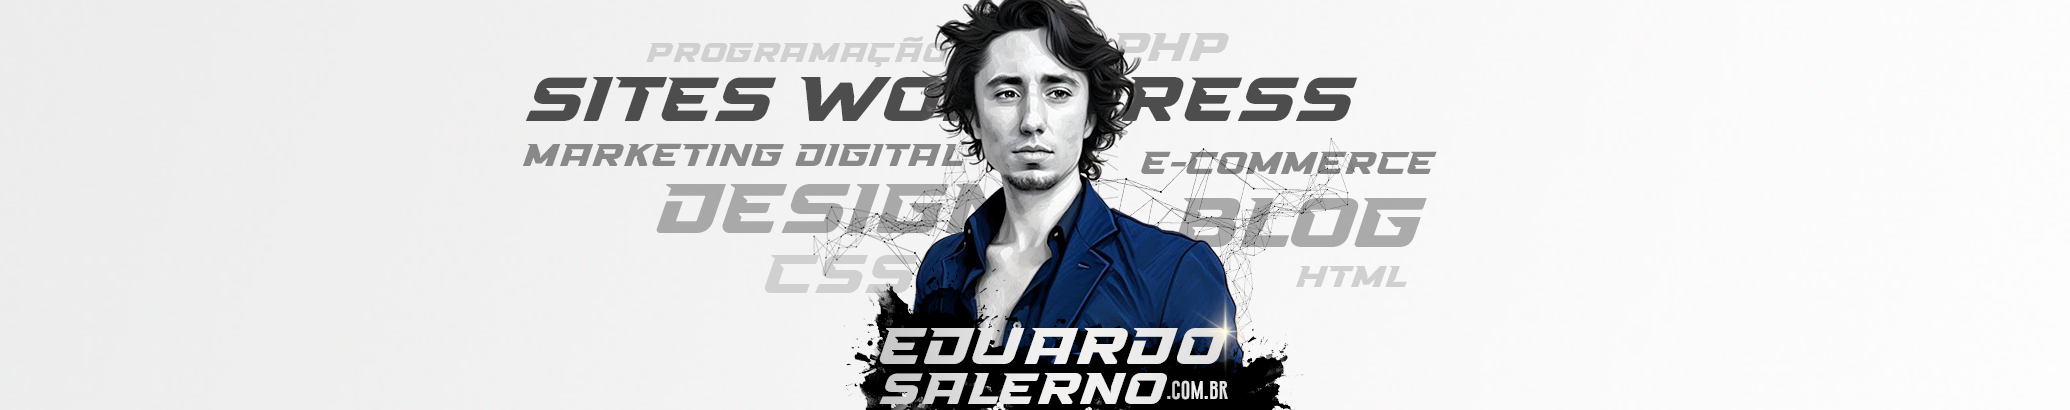 Profil-Banner von Eduardo Salerno